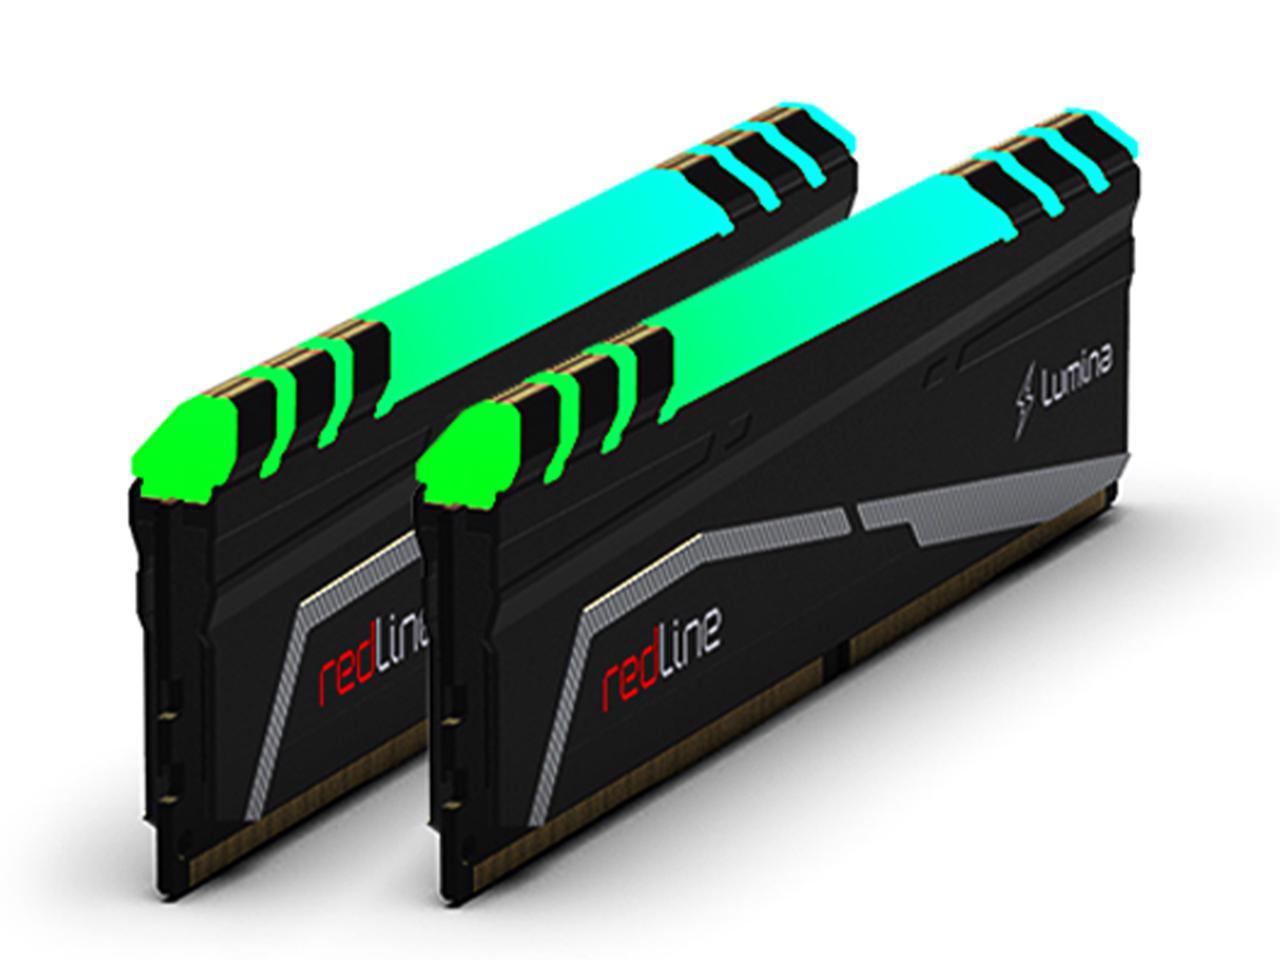 Mushkin Enhanced RGB Redline 16GB (2 x 8GB) DDR4 4000 (PC4 32000) Desktop Memory Model MLA4C400JNNM8GX2